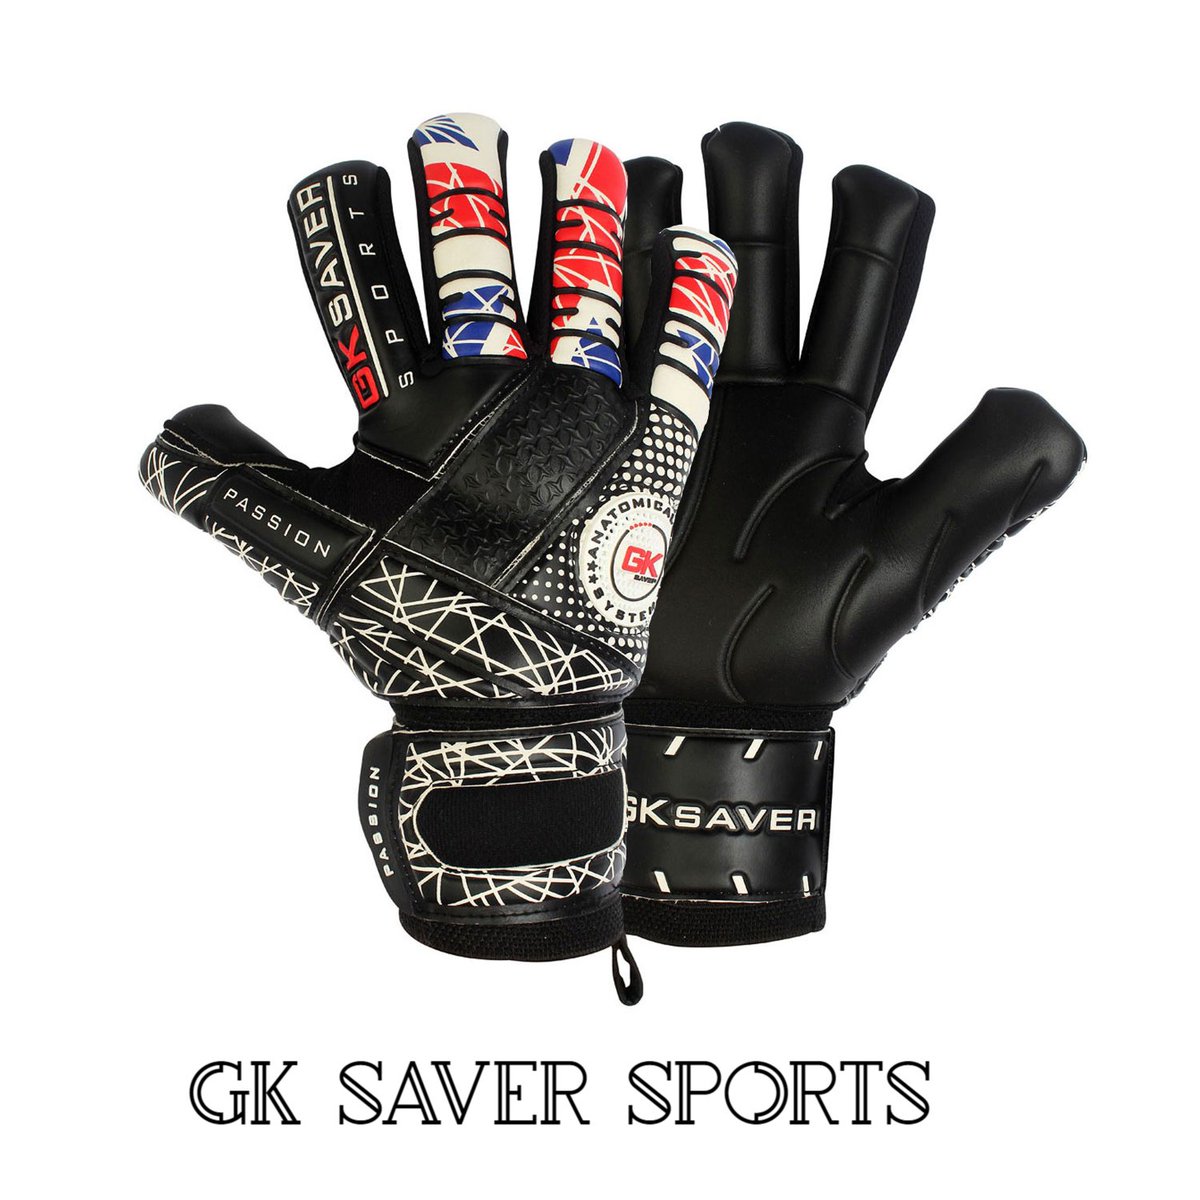 GK Saver Football Goalkeeper Gloves Champ 01 Orange Negative Cut Goalie Gloves YES FINGERSAVE/NO PERSONALIZATION, Size 6 